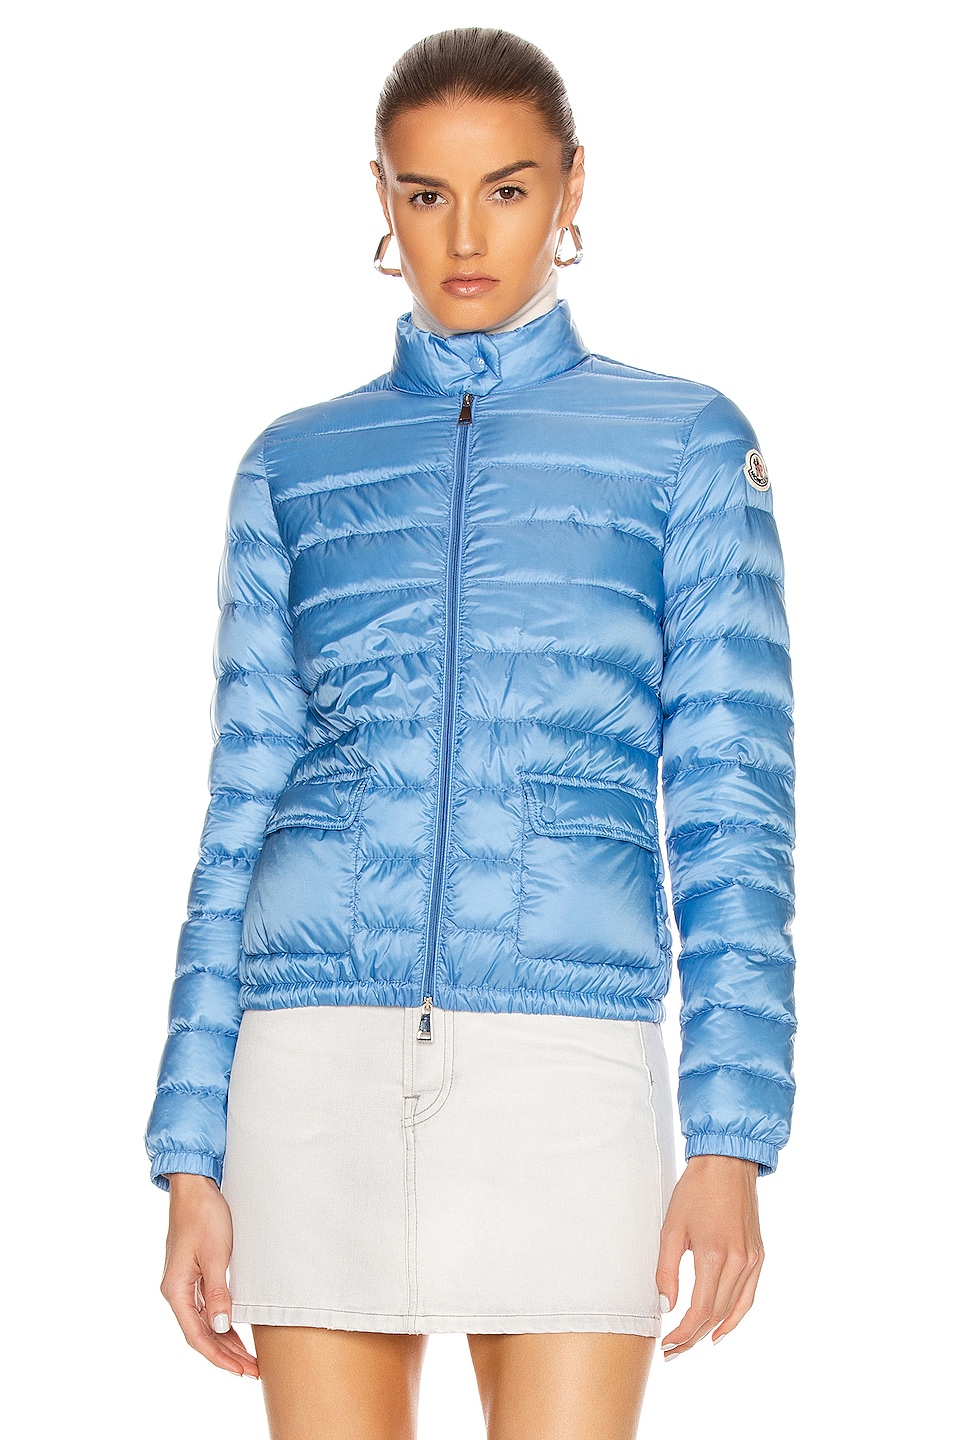 Moncler Lans Giubbotto Jacket in Royal Blue | FWRD